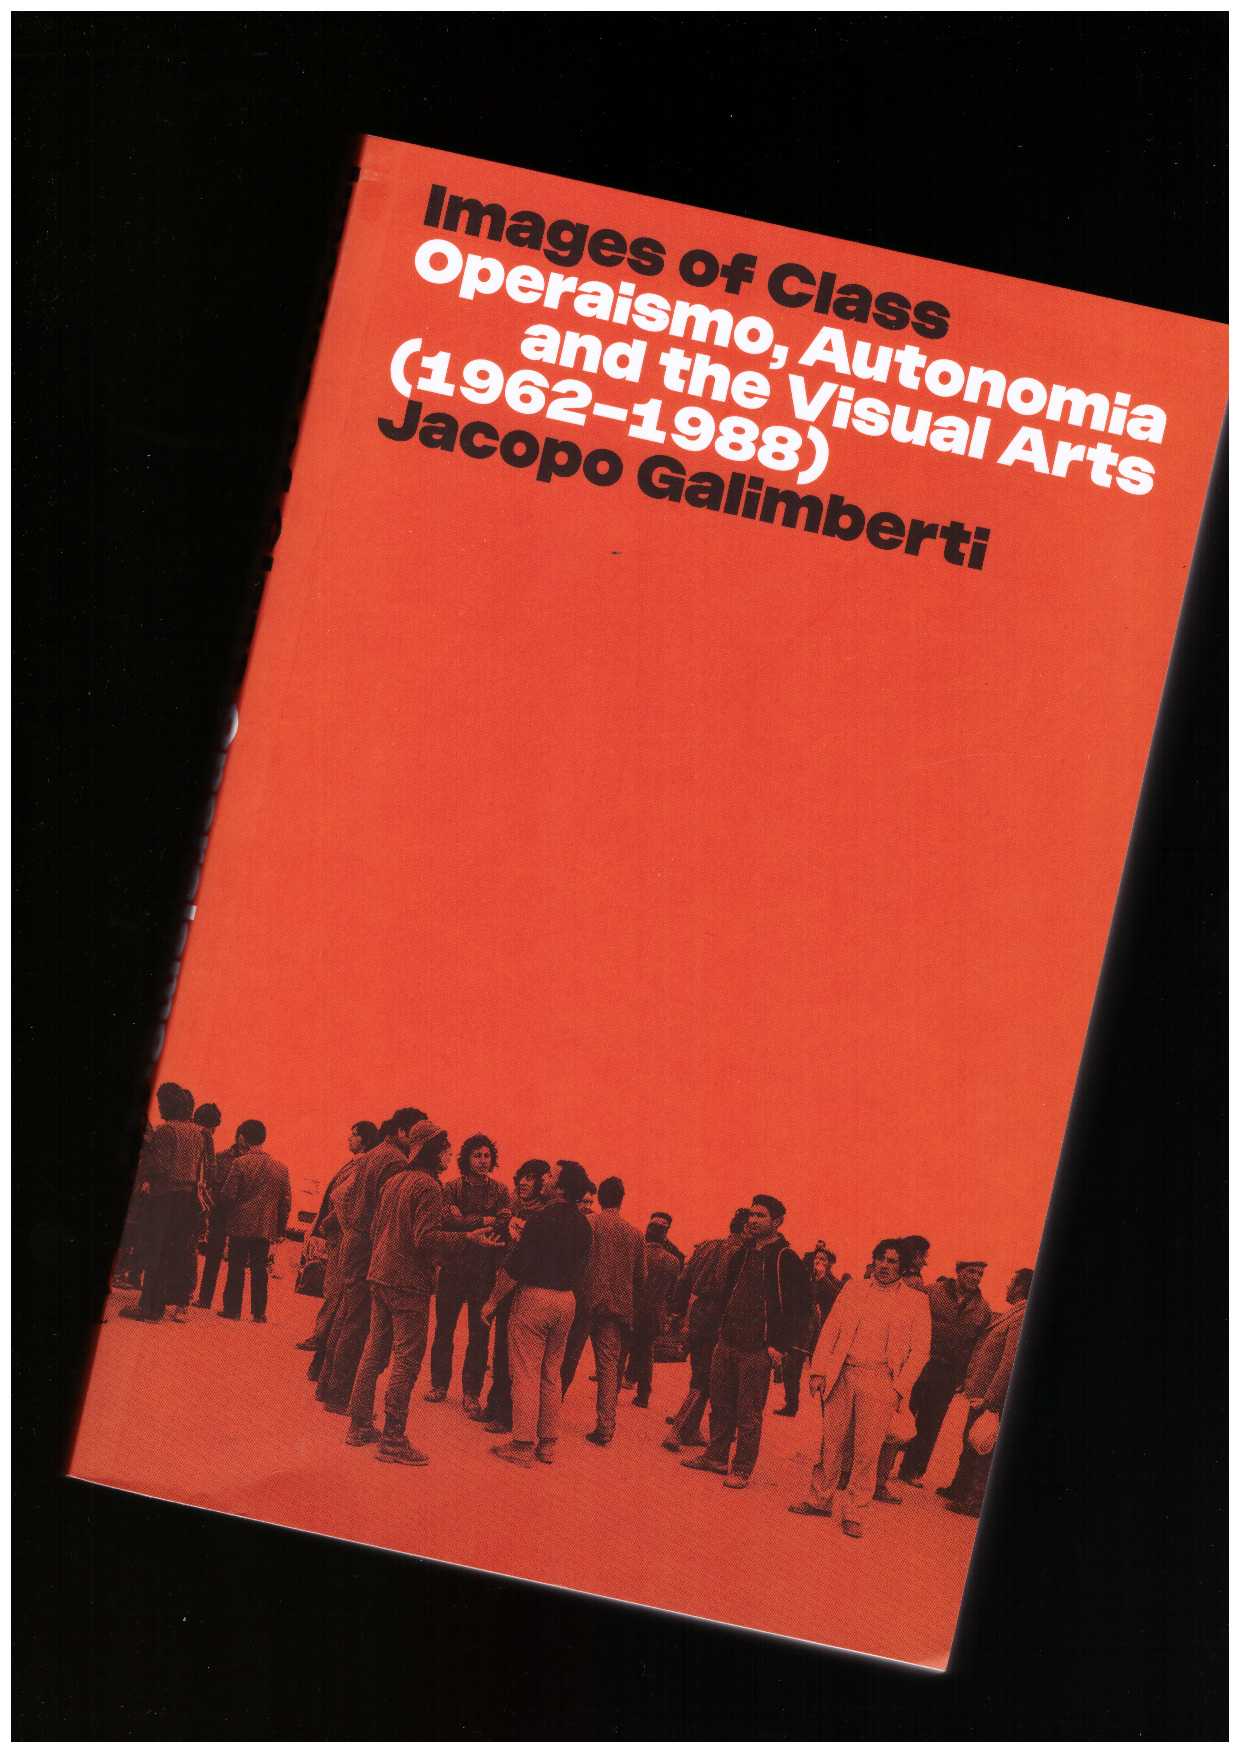 GALIMBERTI, Jacopo - Images of Class. Operaismo, Autonomia and the Visual Arts (1962–1988)